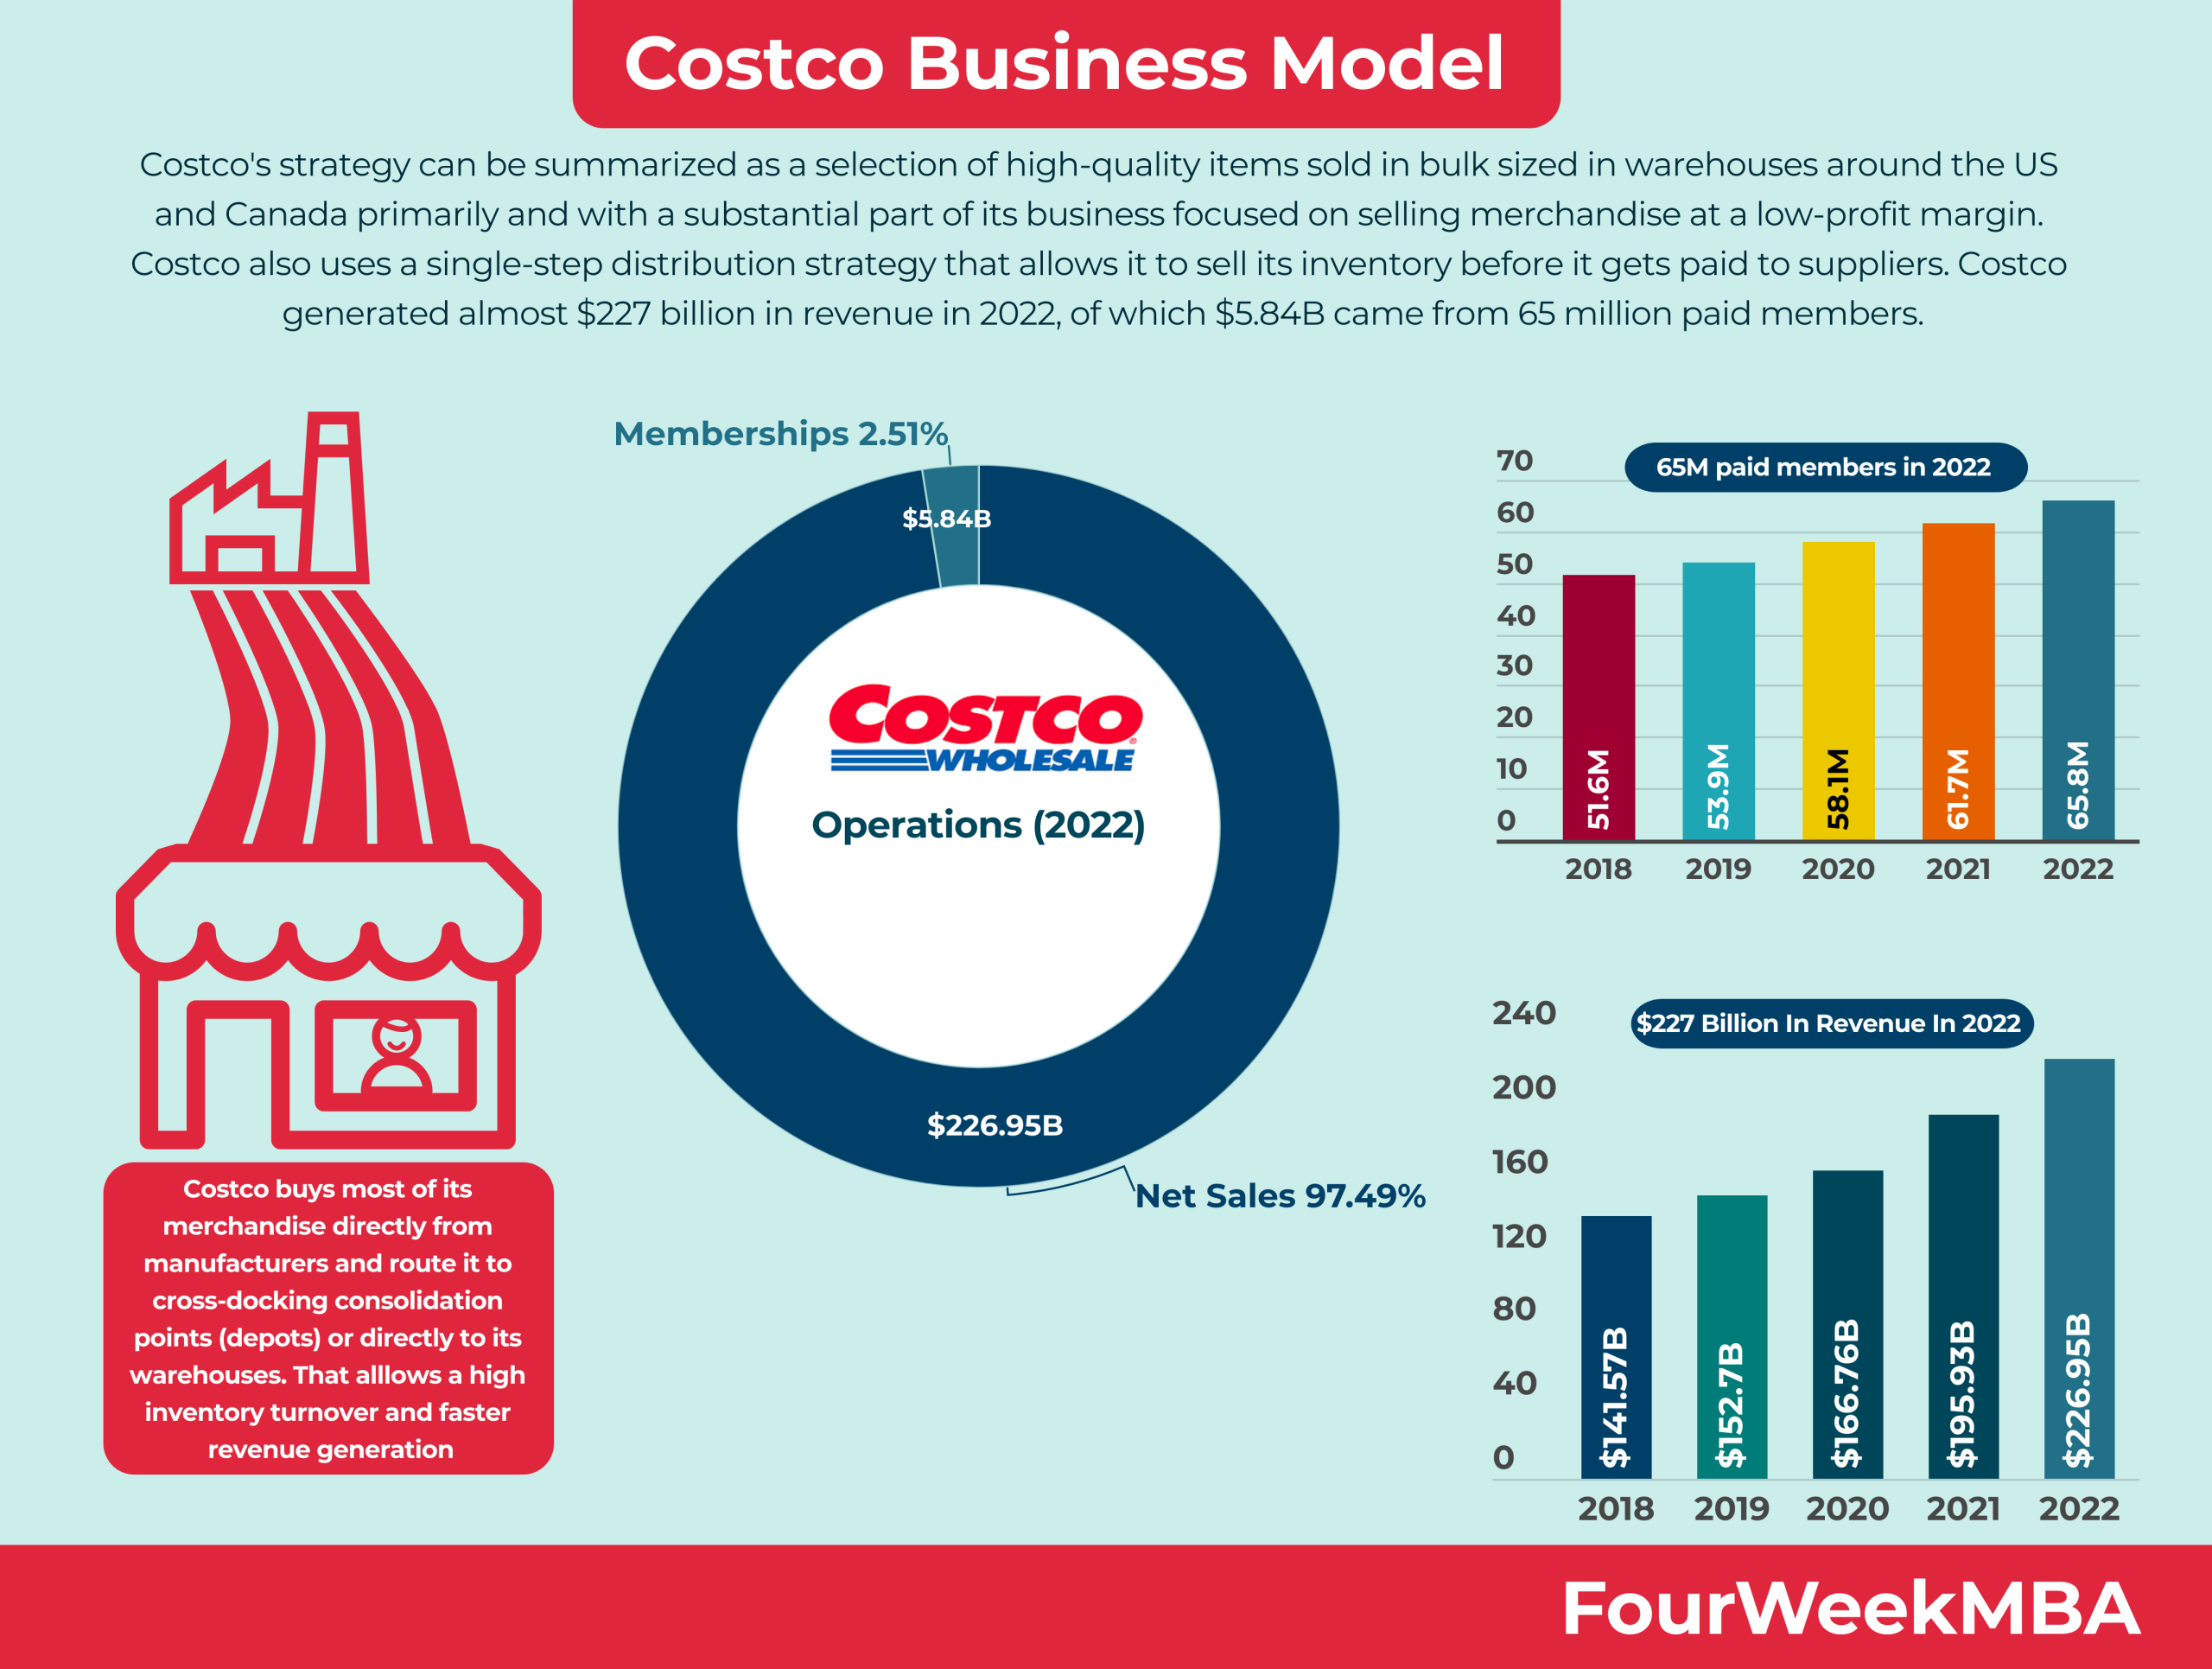 costco mobile business plans